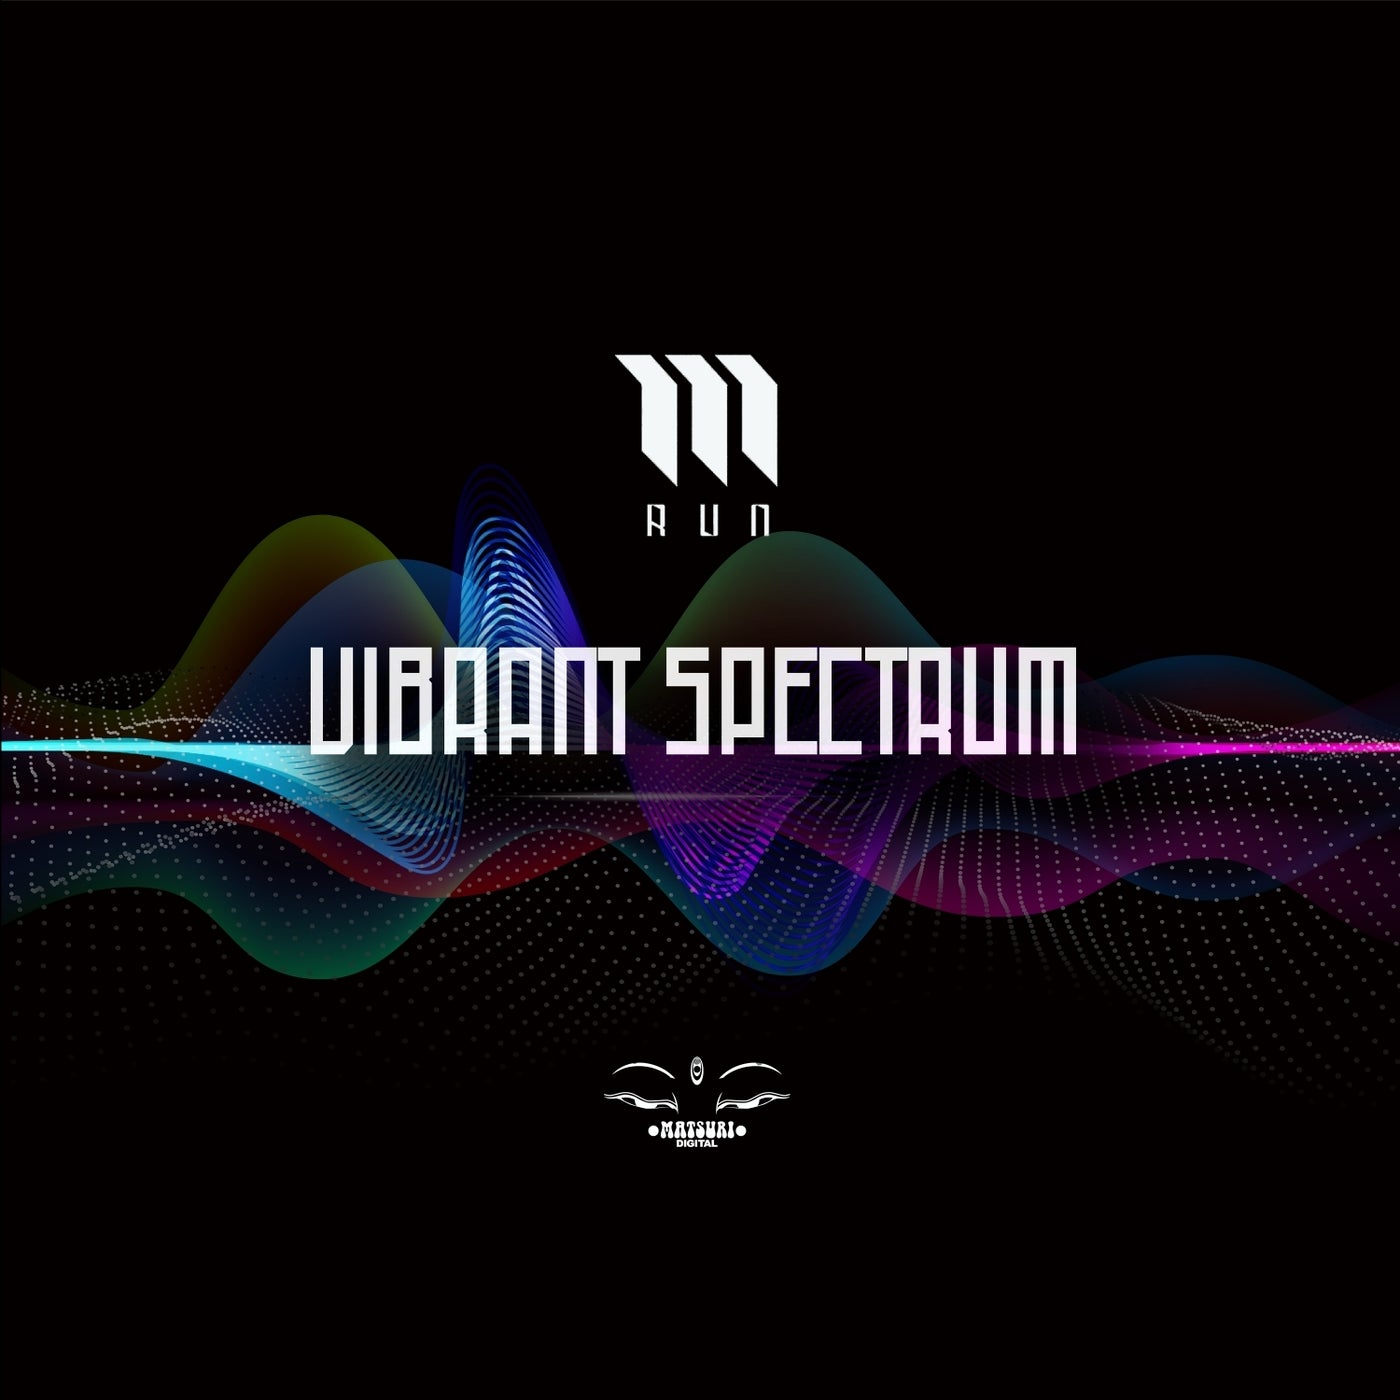 Vibrant Spectrum